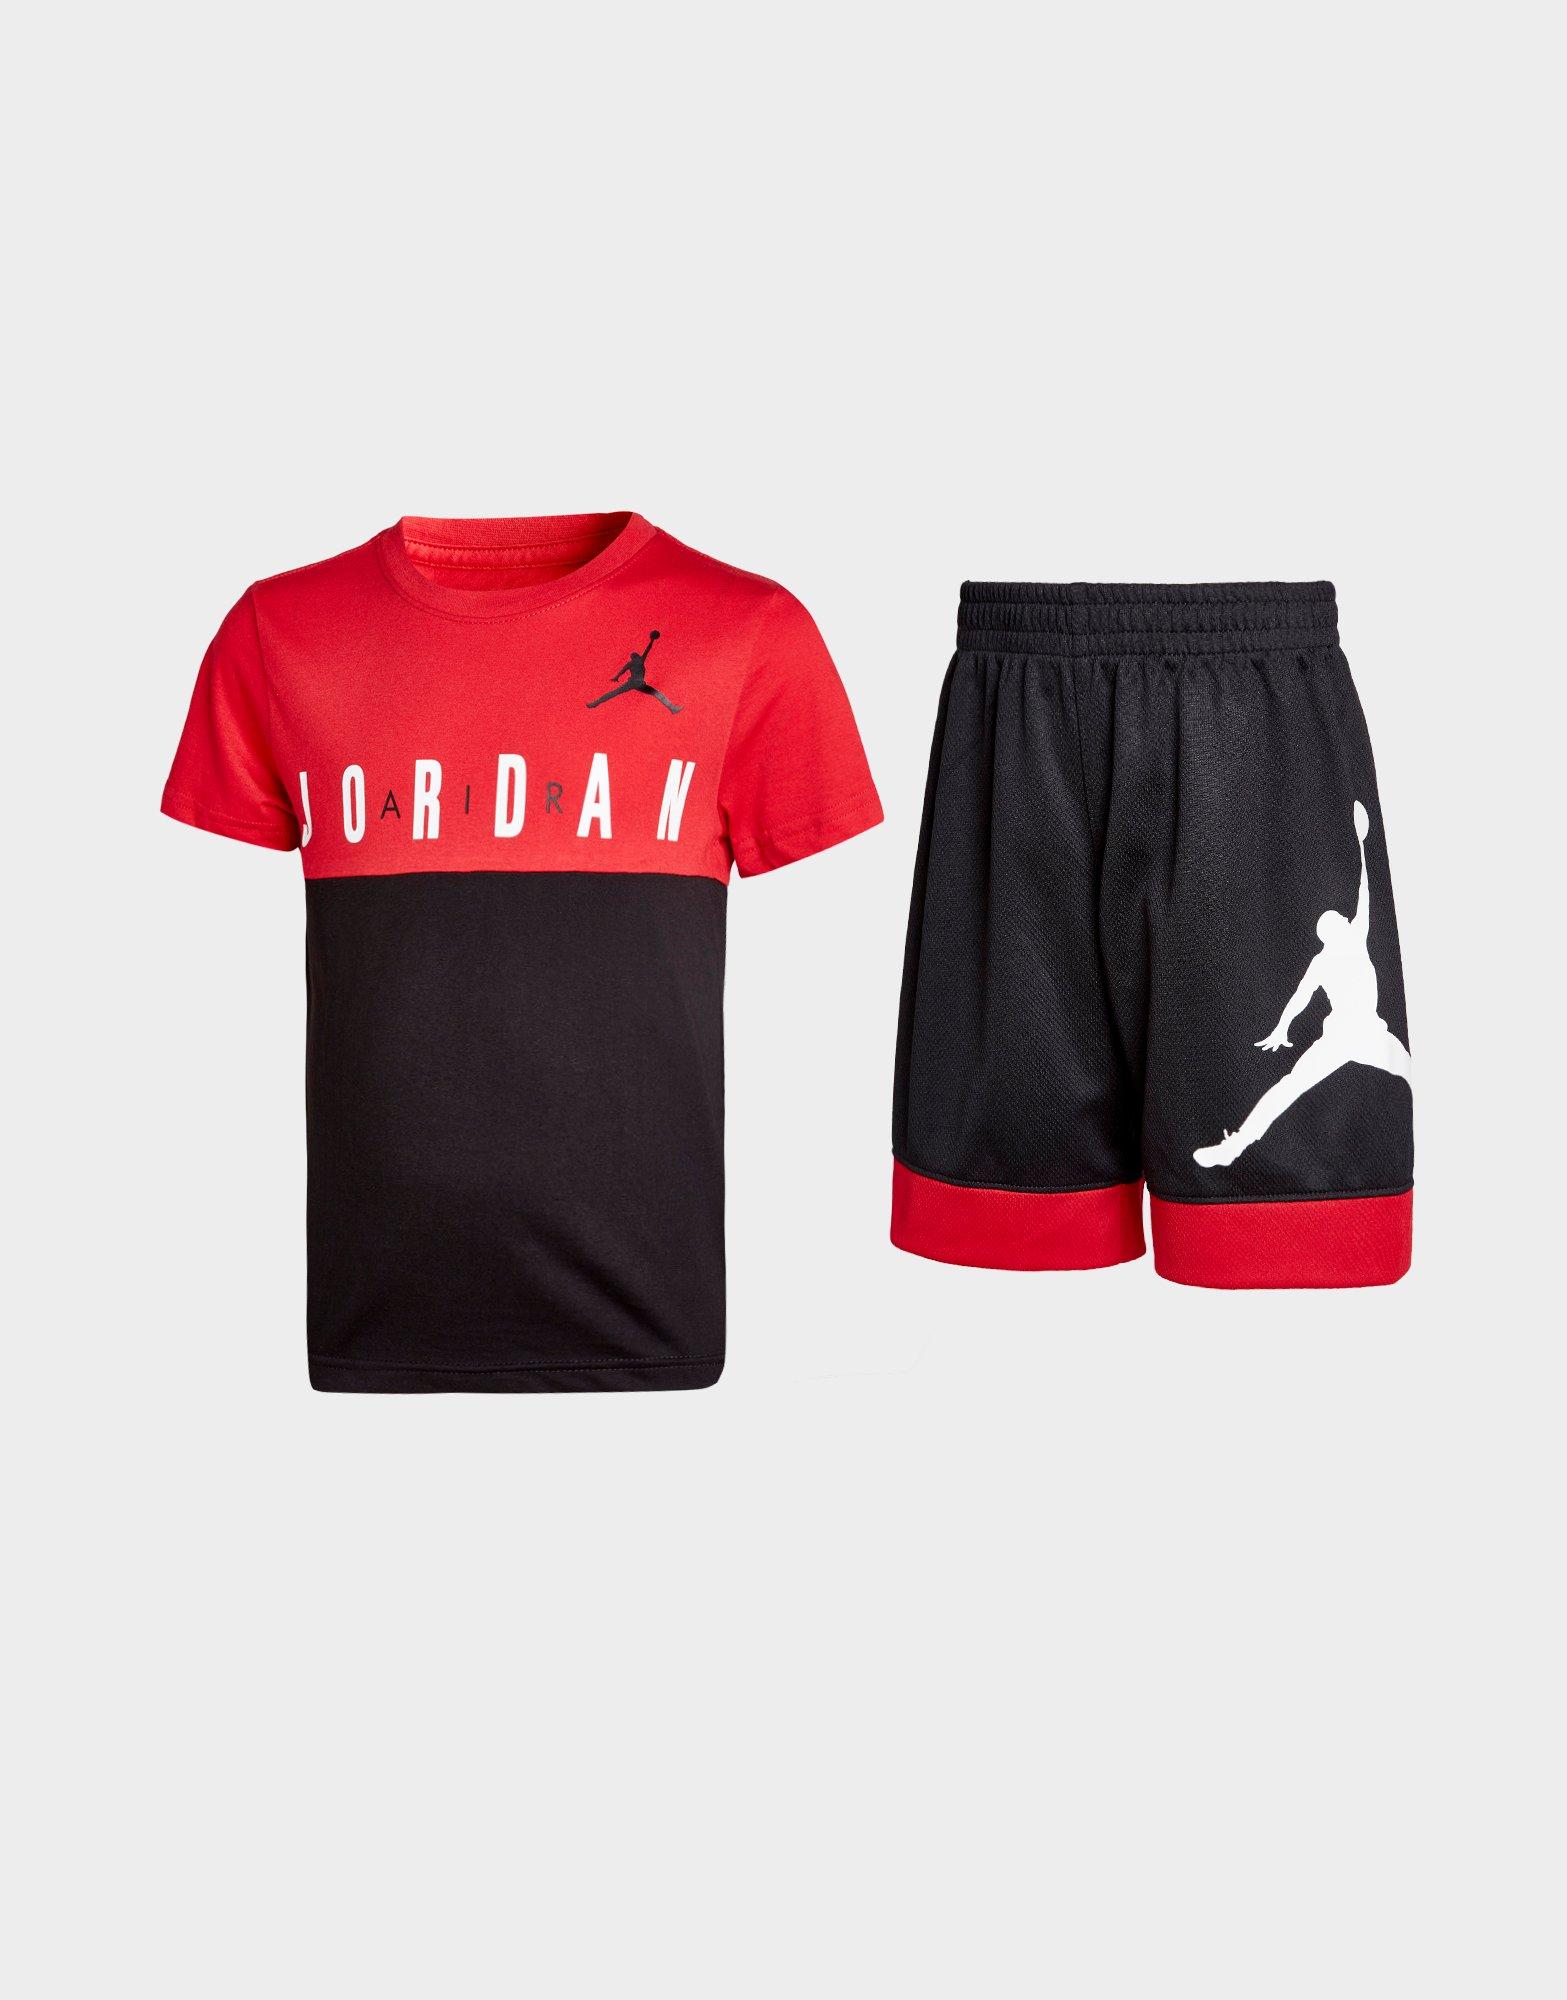 jordan t shirt and shorts